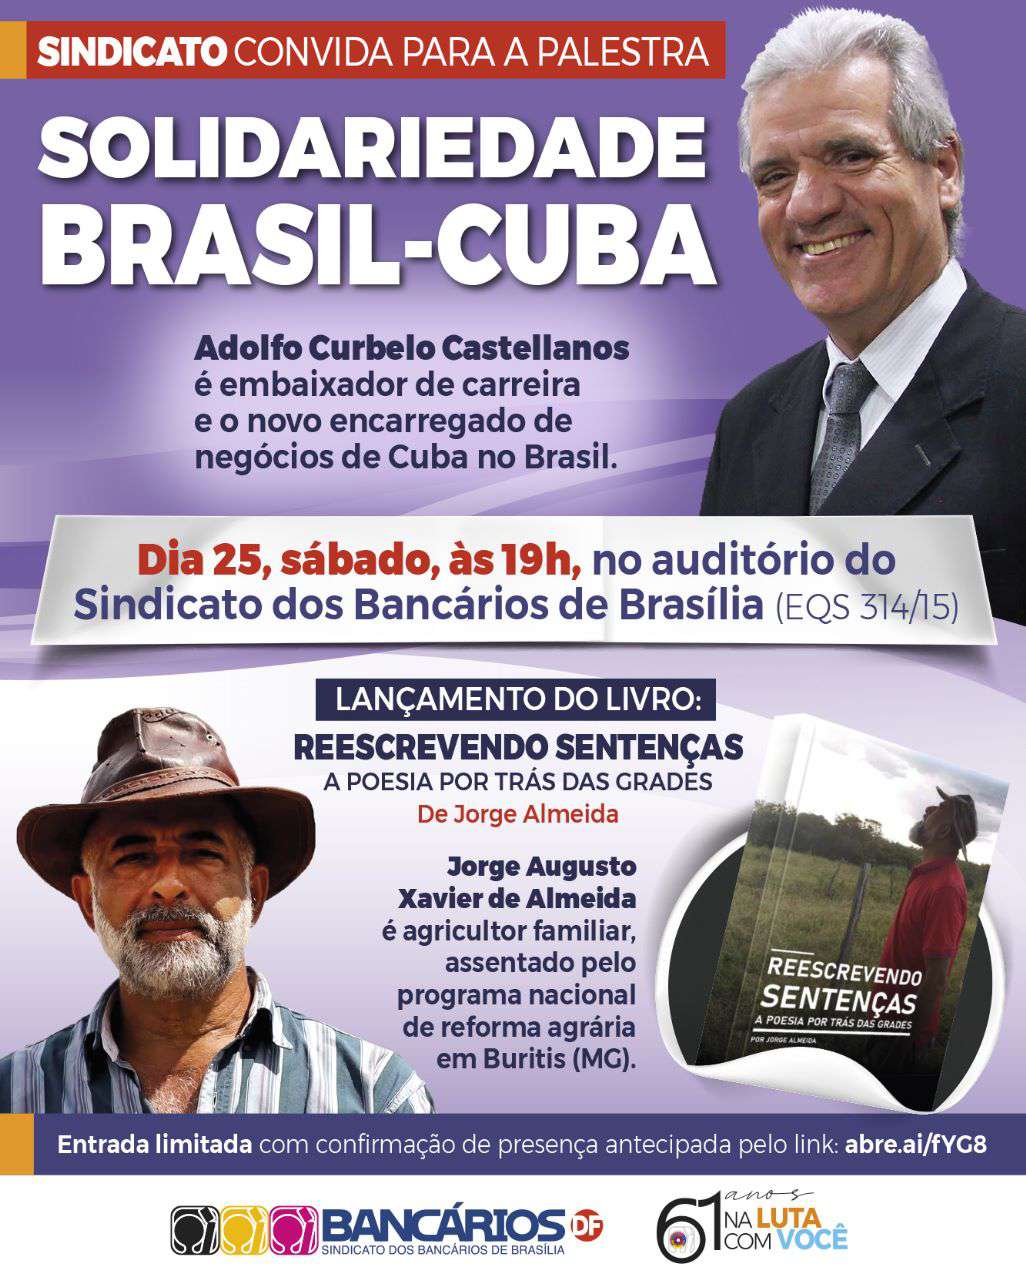 BRASIL e CUBA - PALESTRA